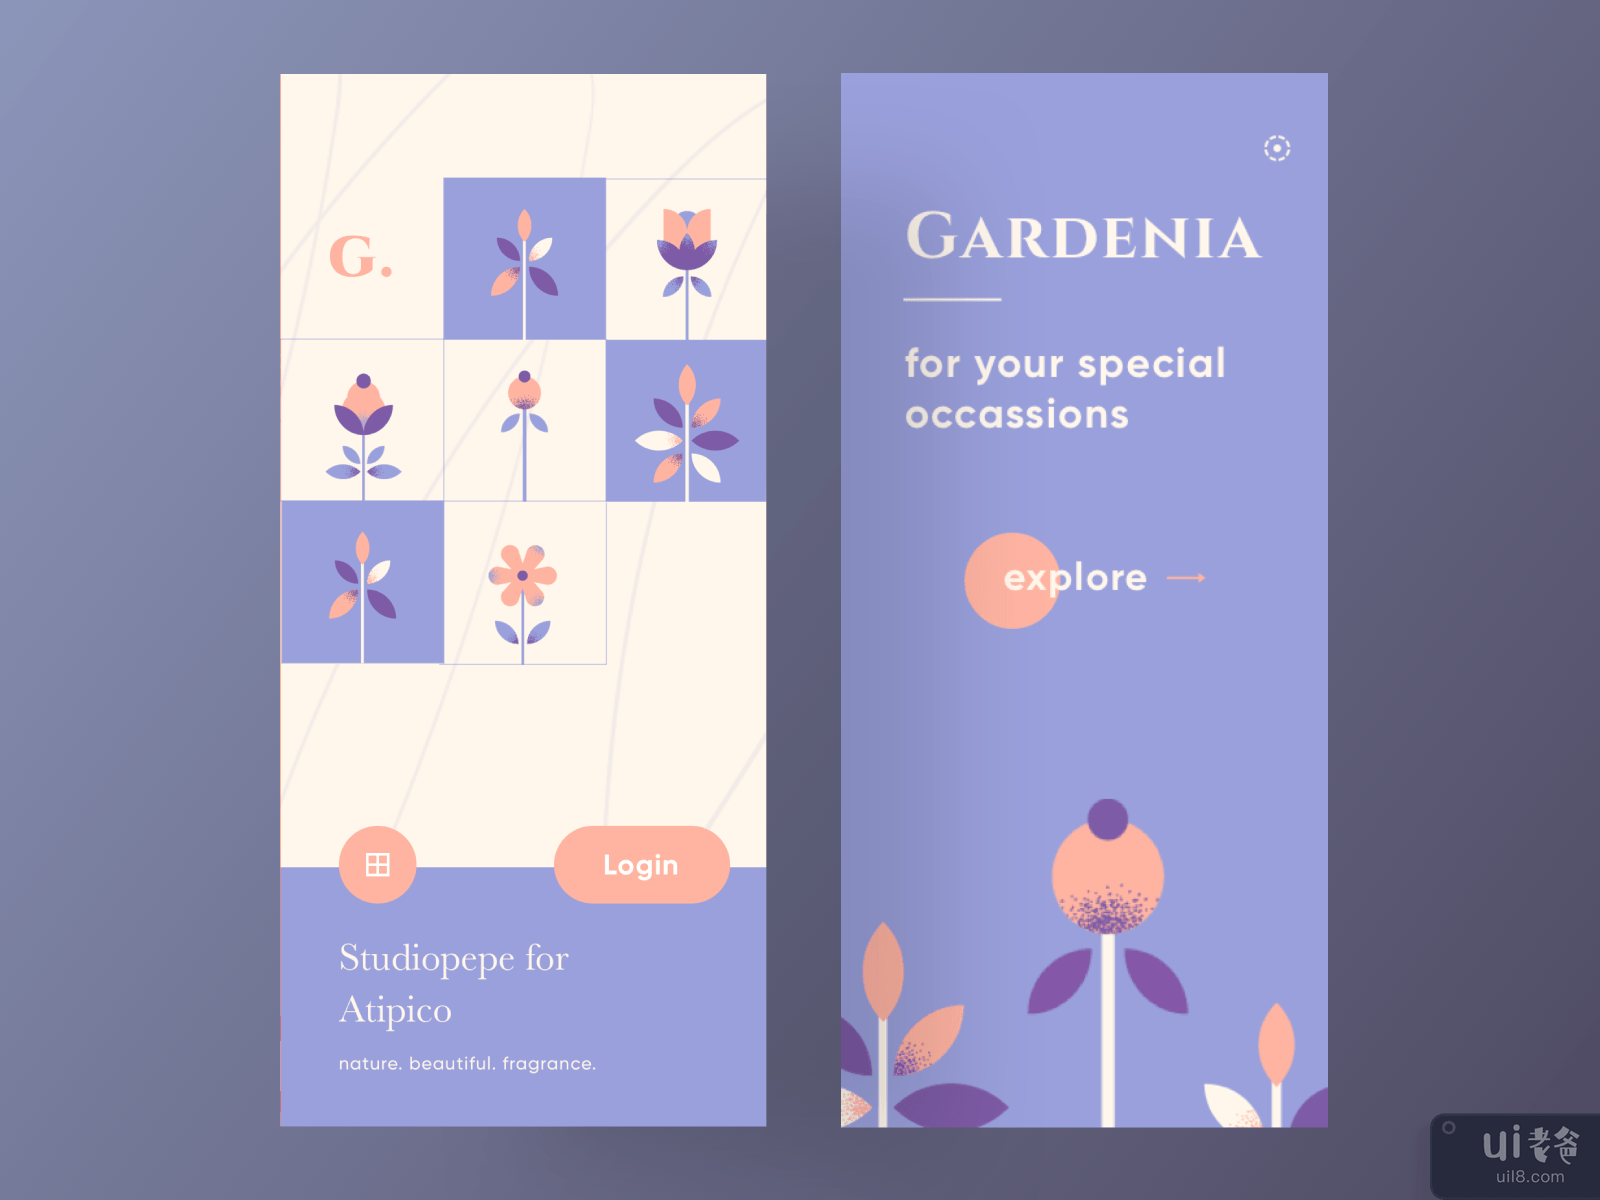 Gardenia - Plants & Flowers for your special occas